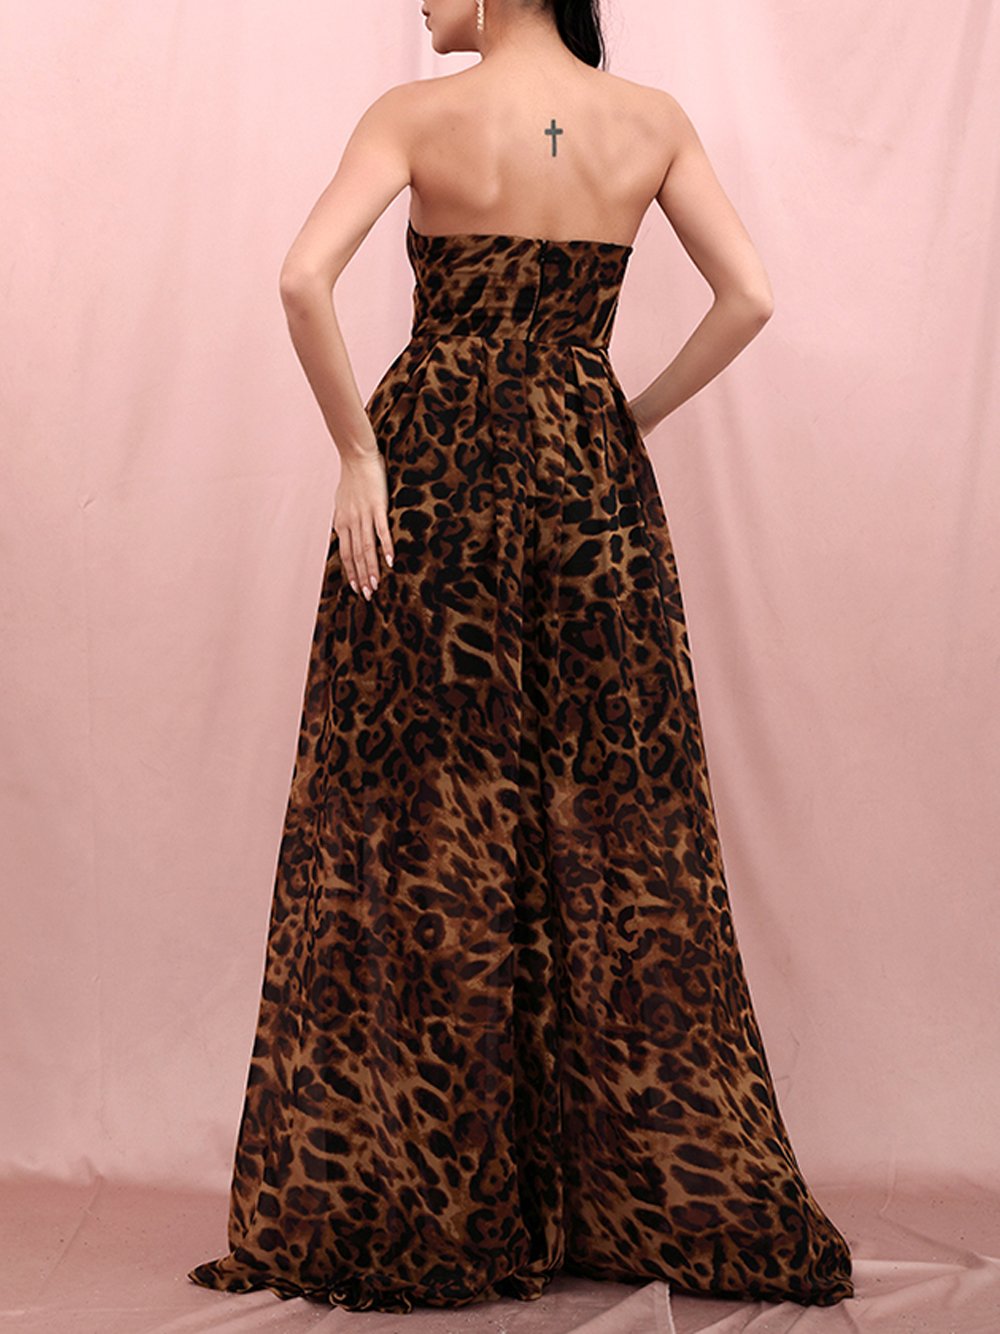 ROMBA Tube Top Leopard Maxi Dress